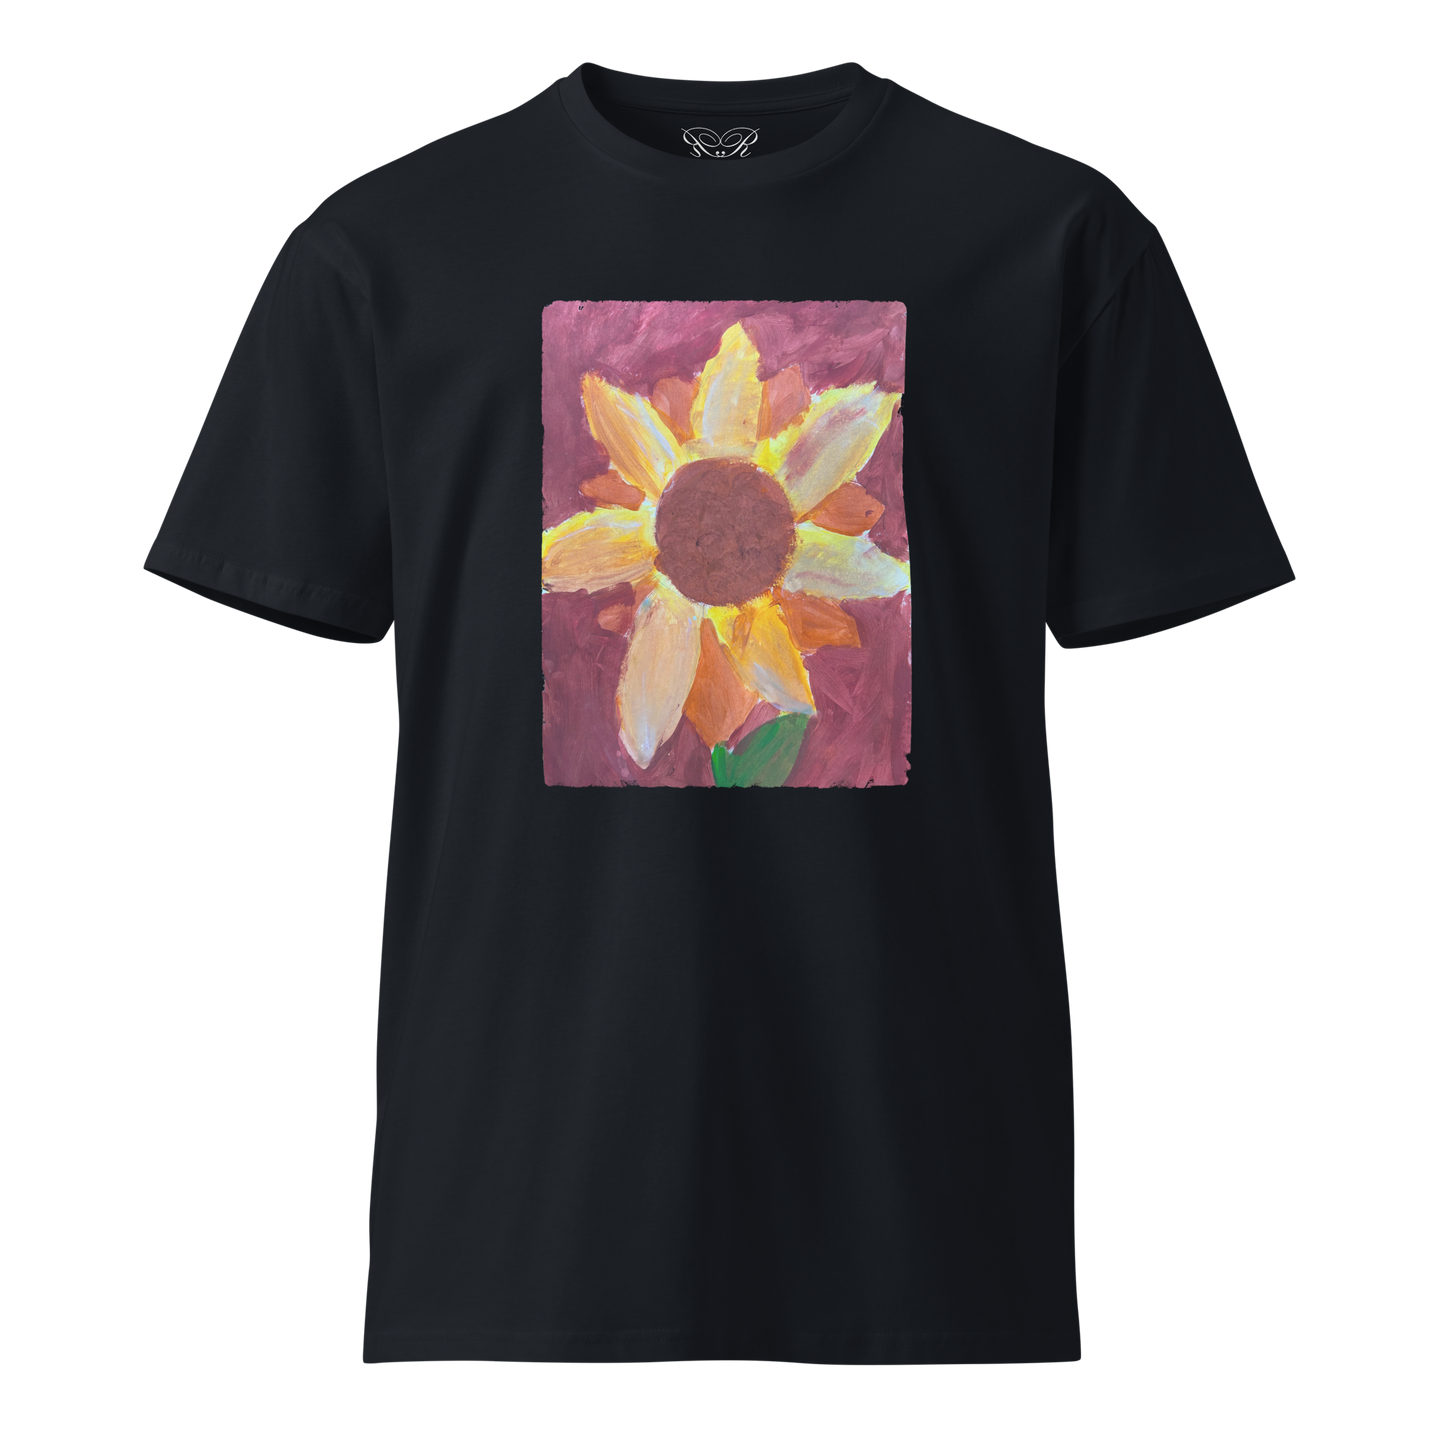 Unisex premium t-shirt "Sunflower"